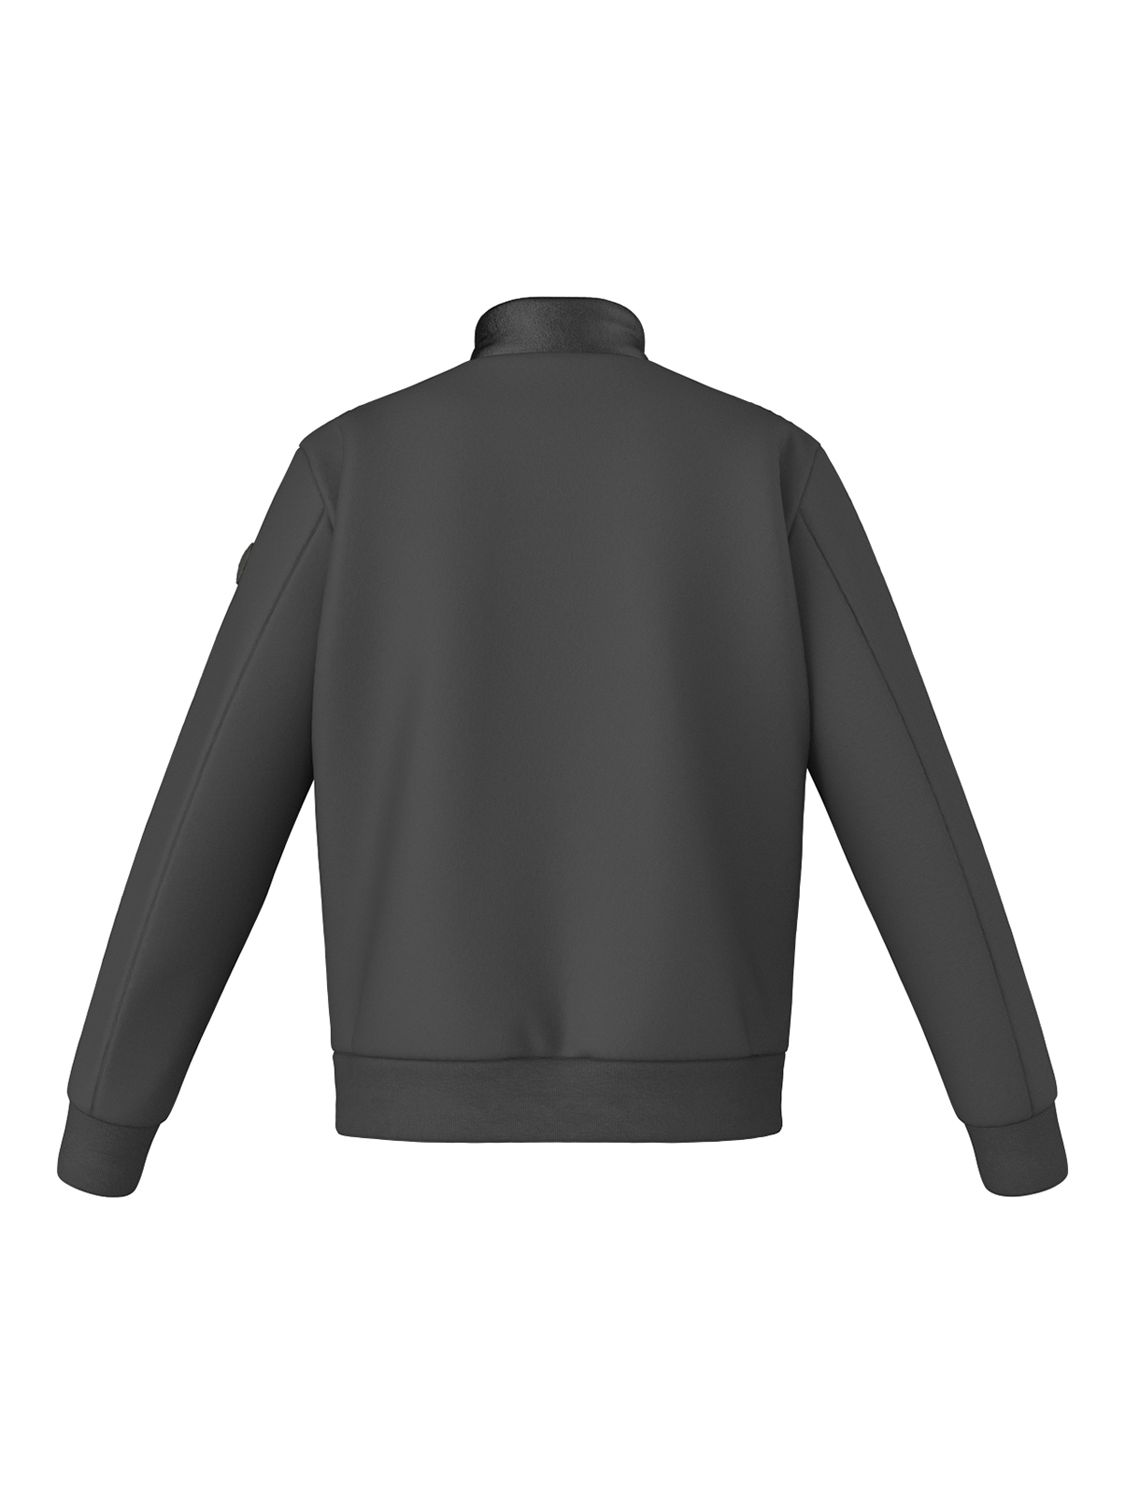 JOOP! Boros Puffer Jacket, Black at John Lewis & Partners